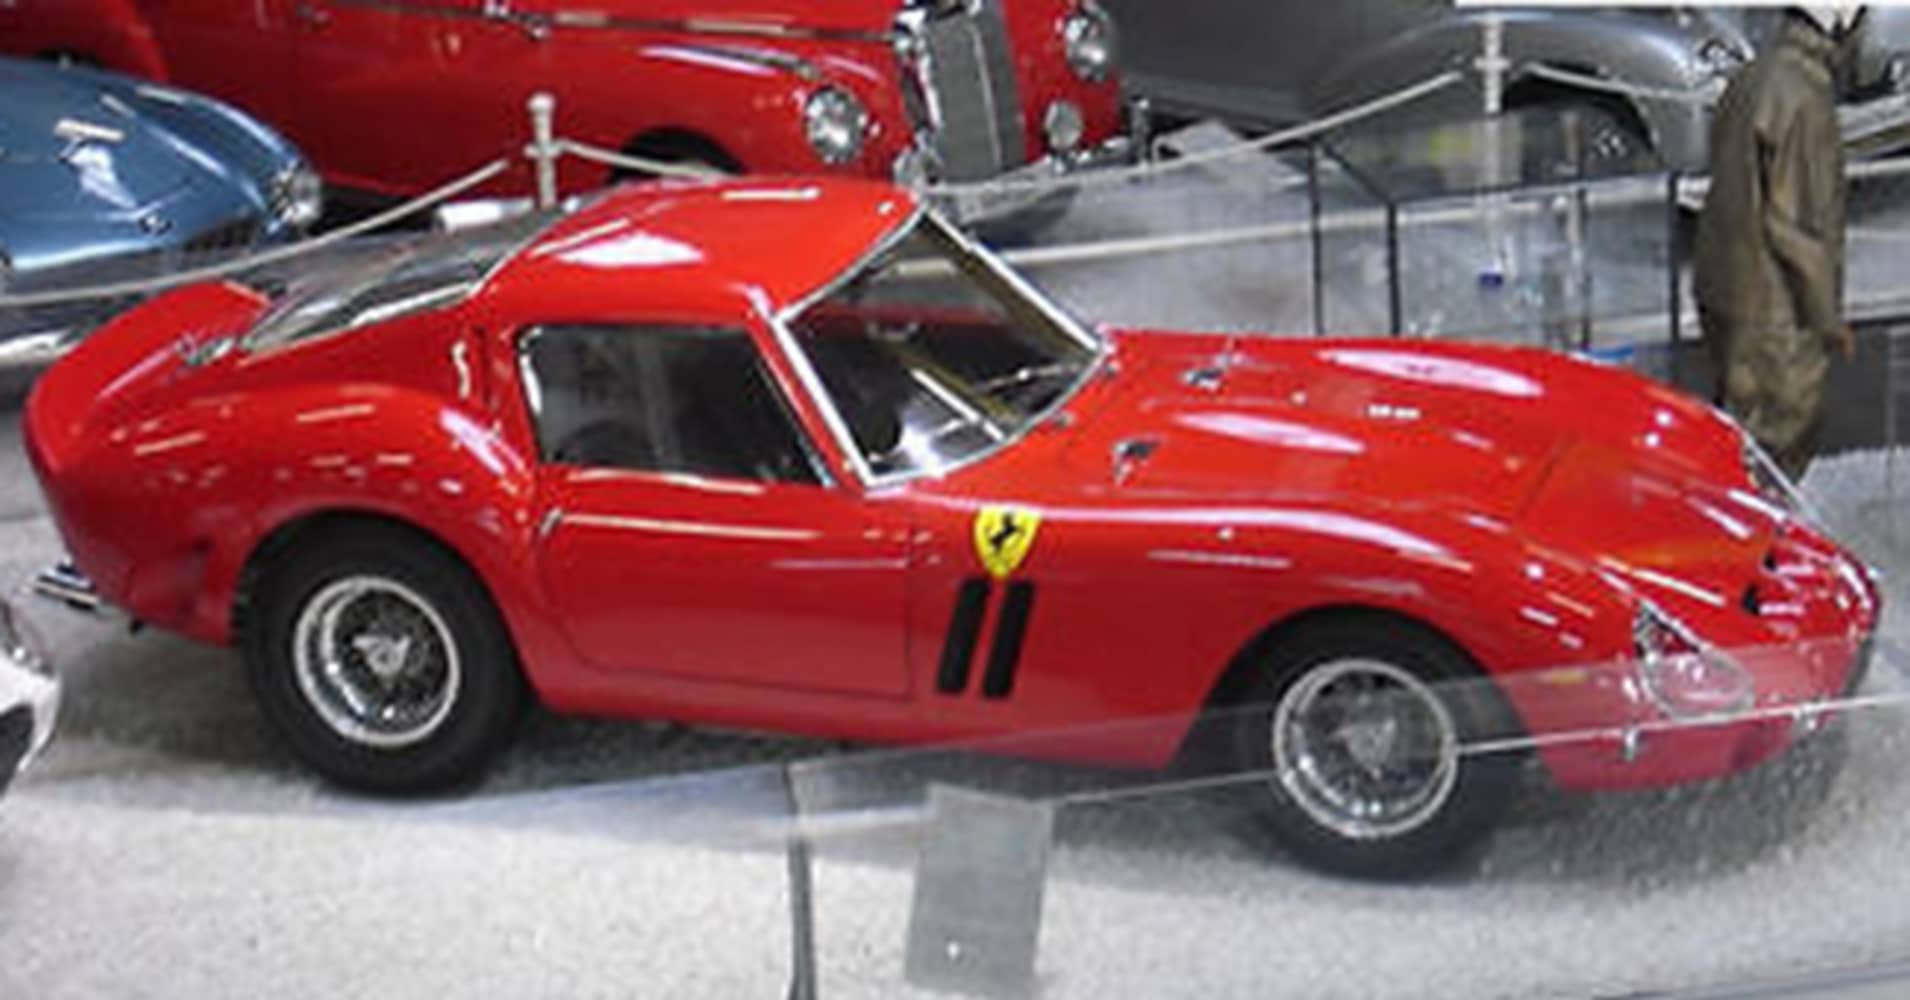 A $63 million Ferrari is a fake, expert says